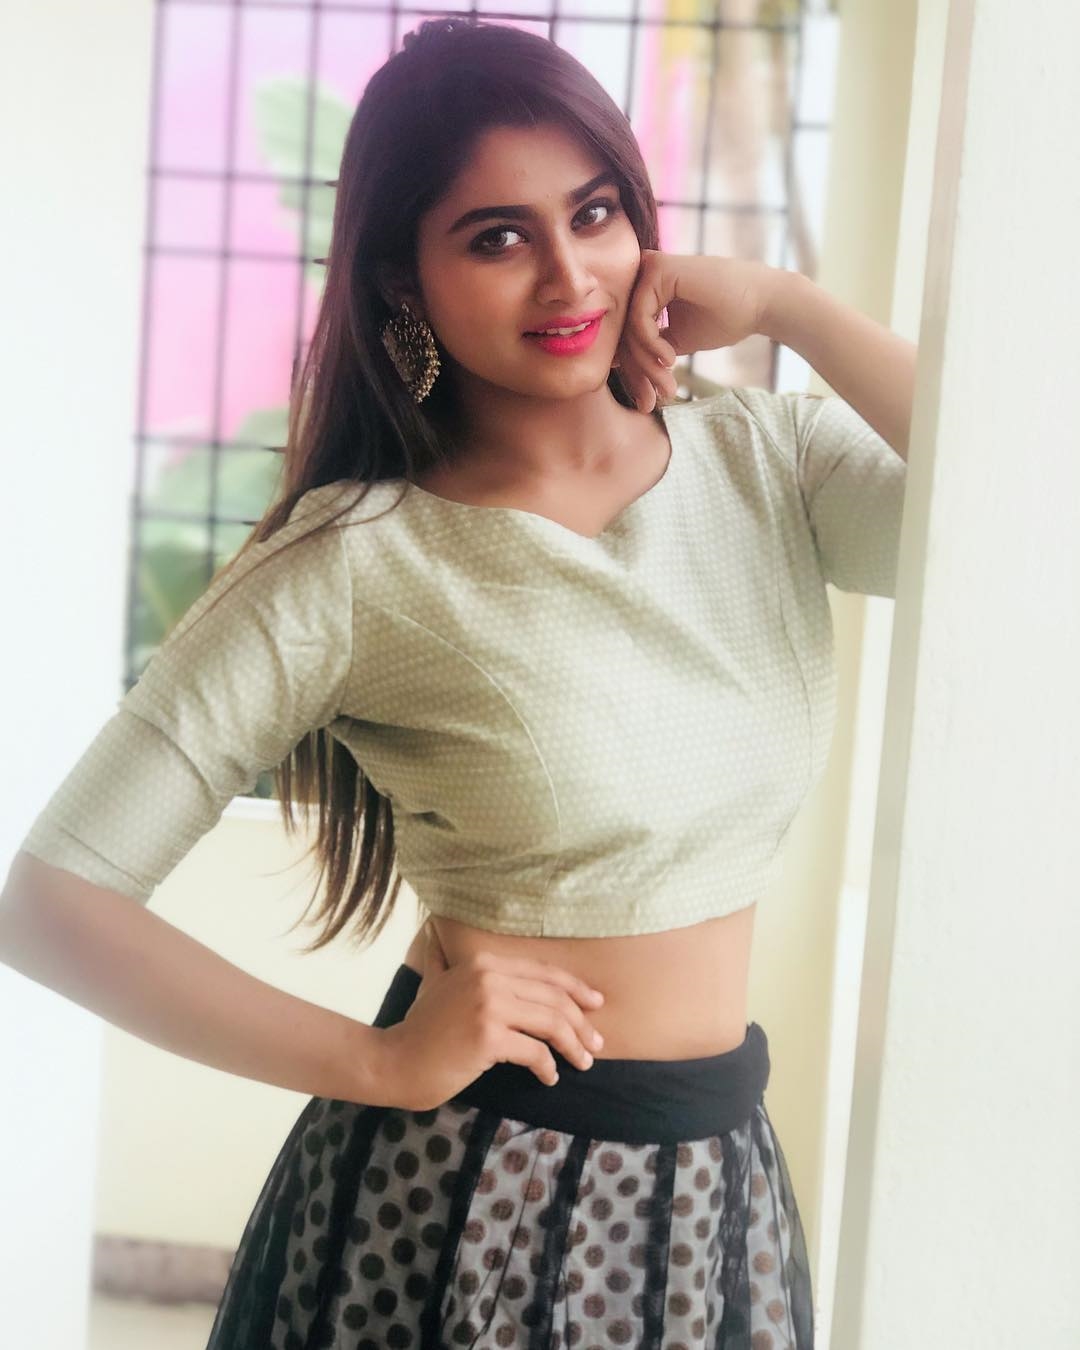 Tamil BiggBoss Contestant Shivani Narayan Hot Images